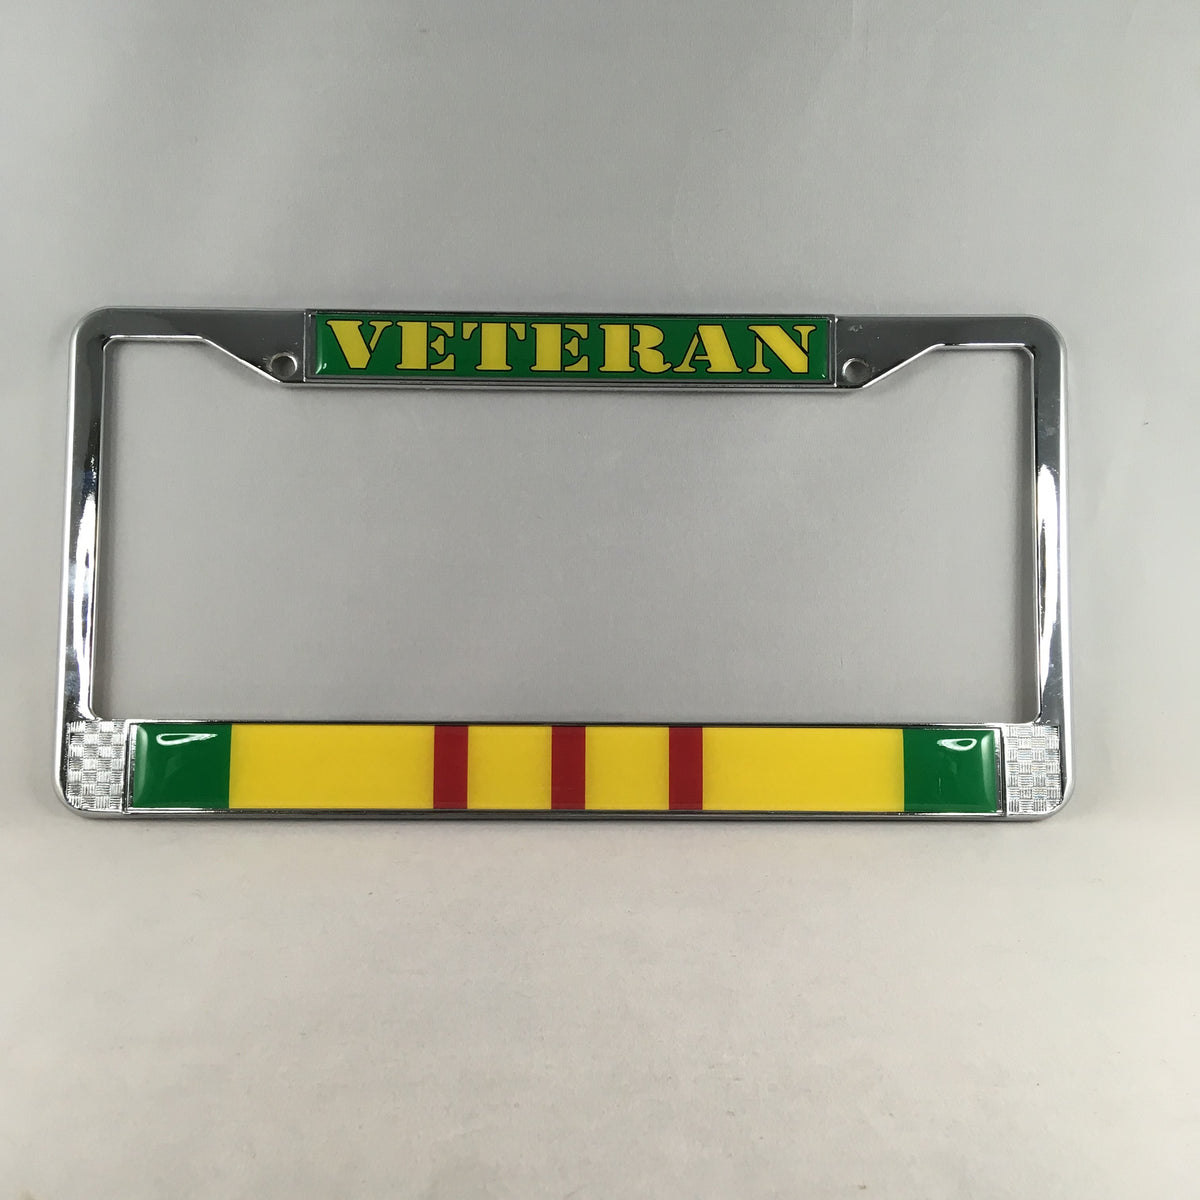 Vietnam Veteran License Plate Holder